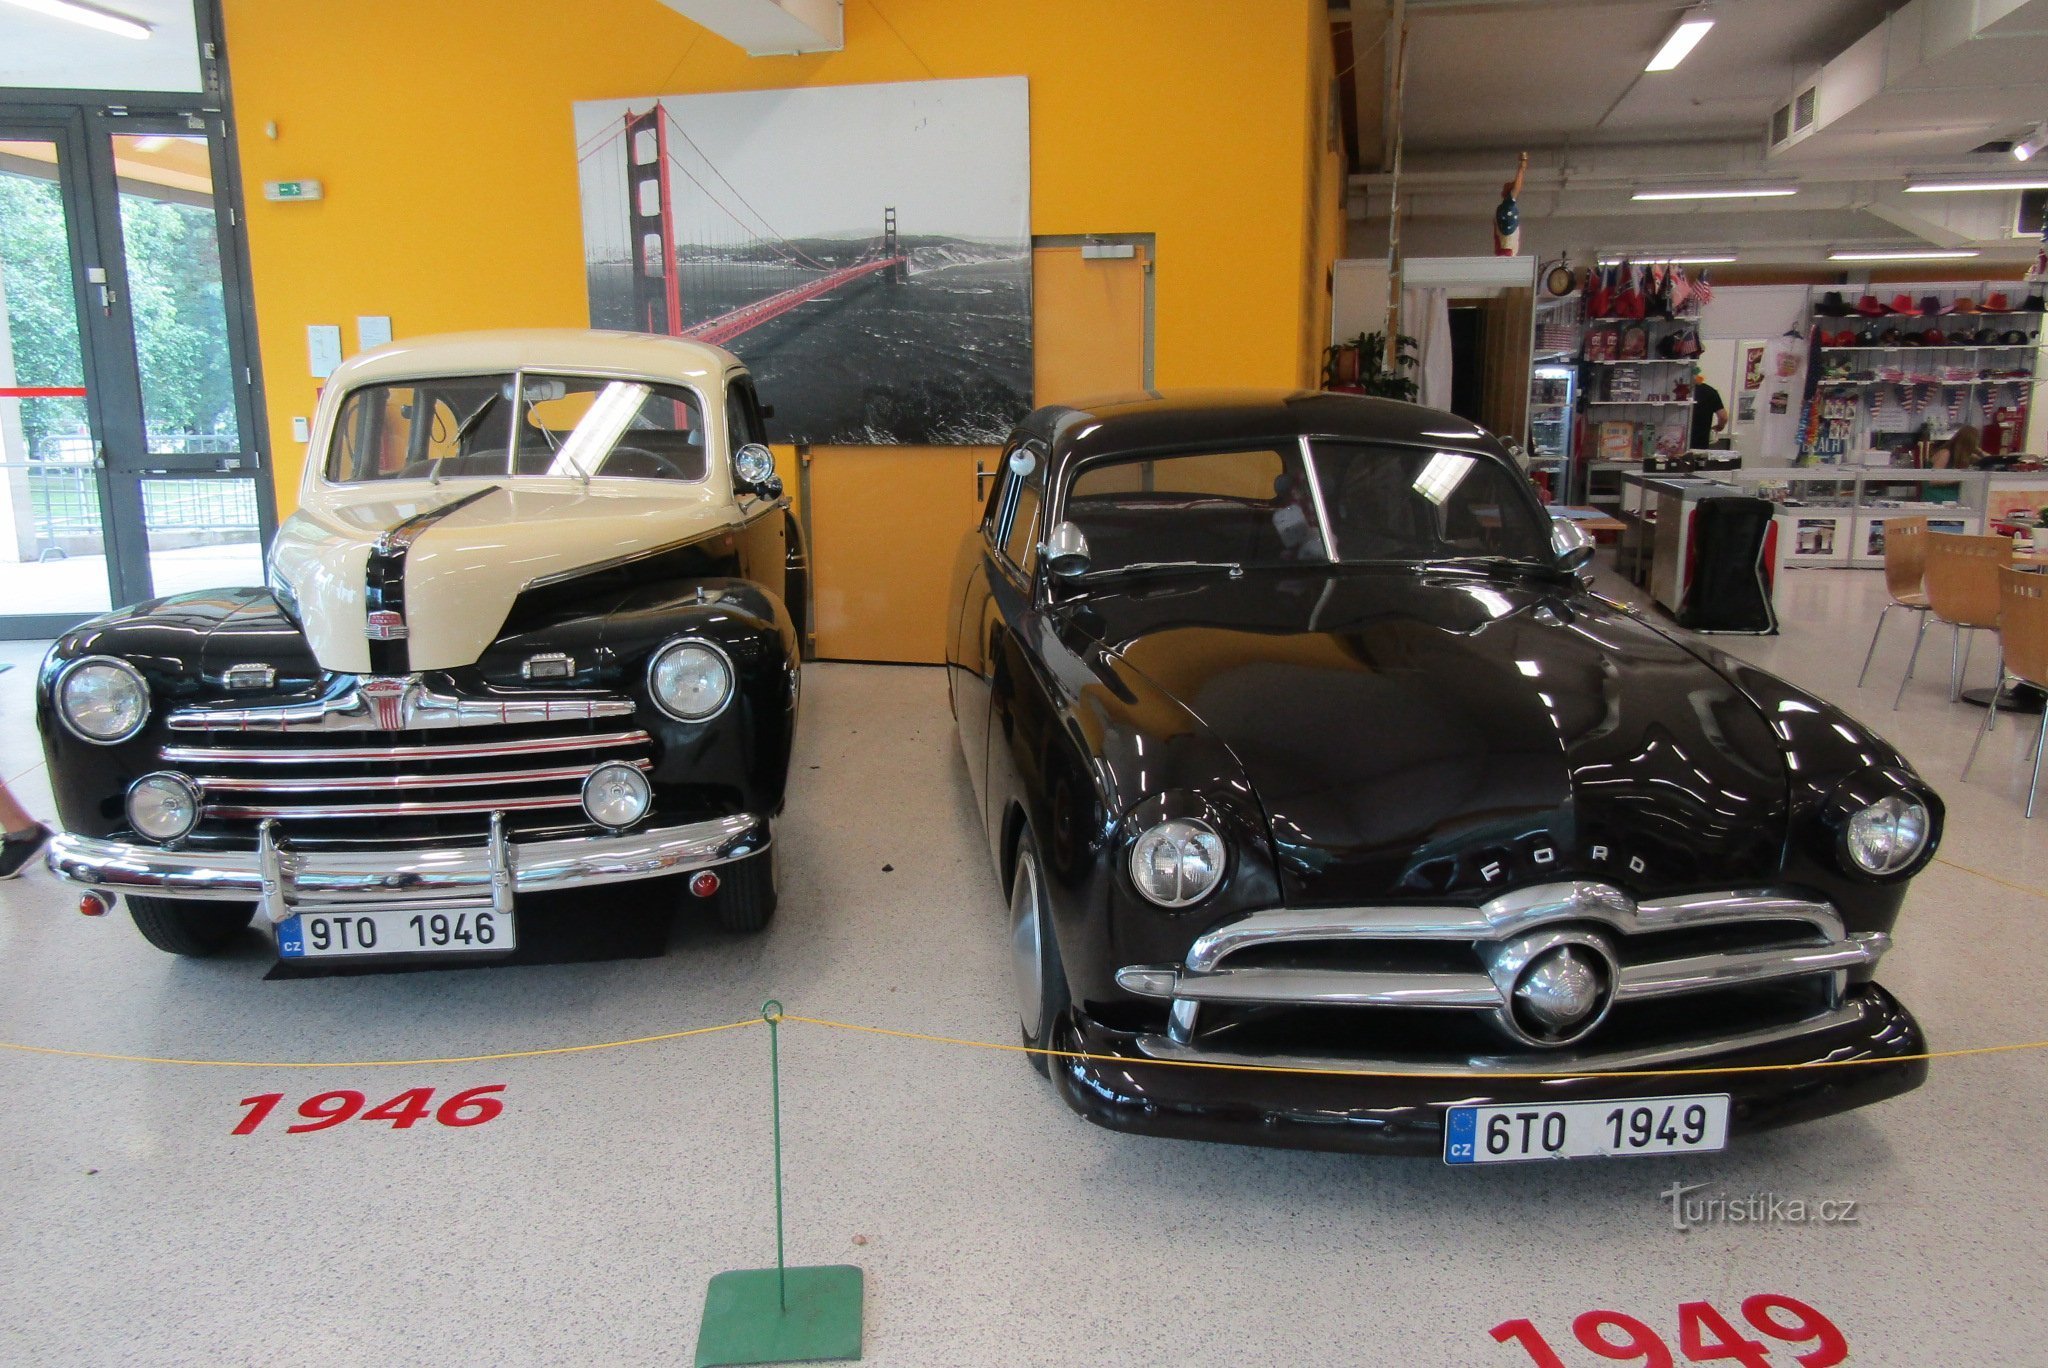 American Classic Cars, centro espositivo Černá Louka, Ostrava